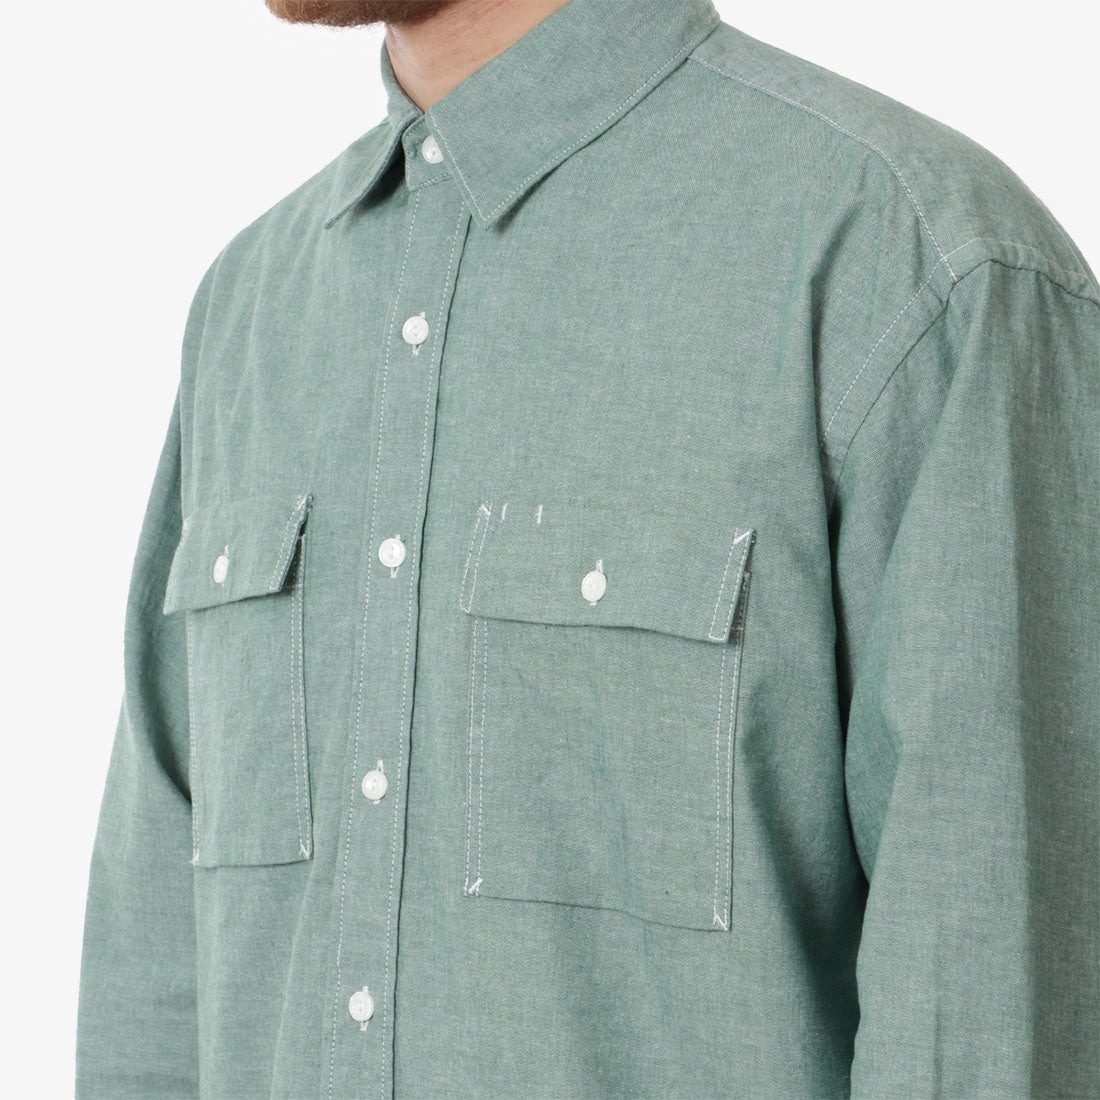 FrizmWORKS Cigarette Pocket Chambray Shirt, Green, Detail Shot 2